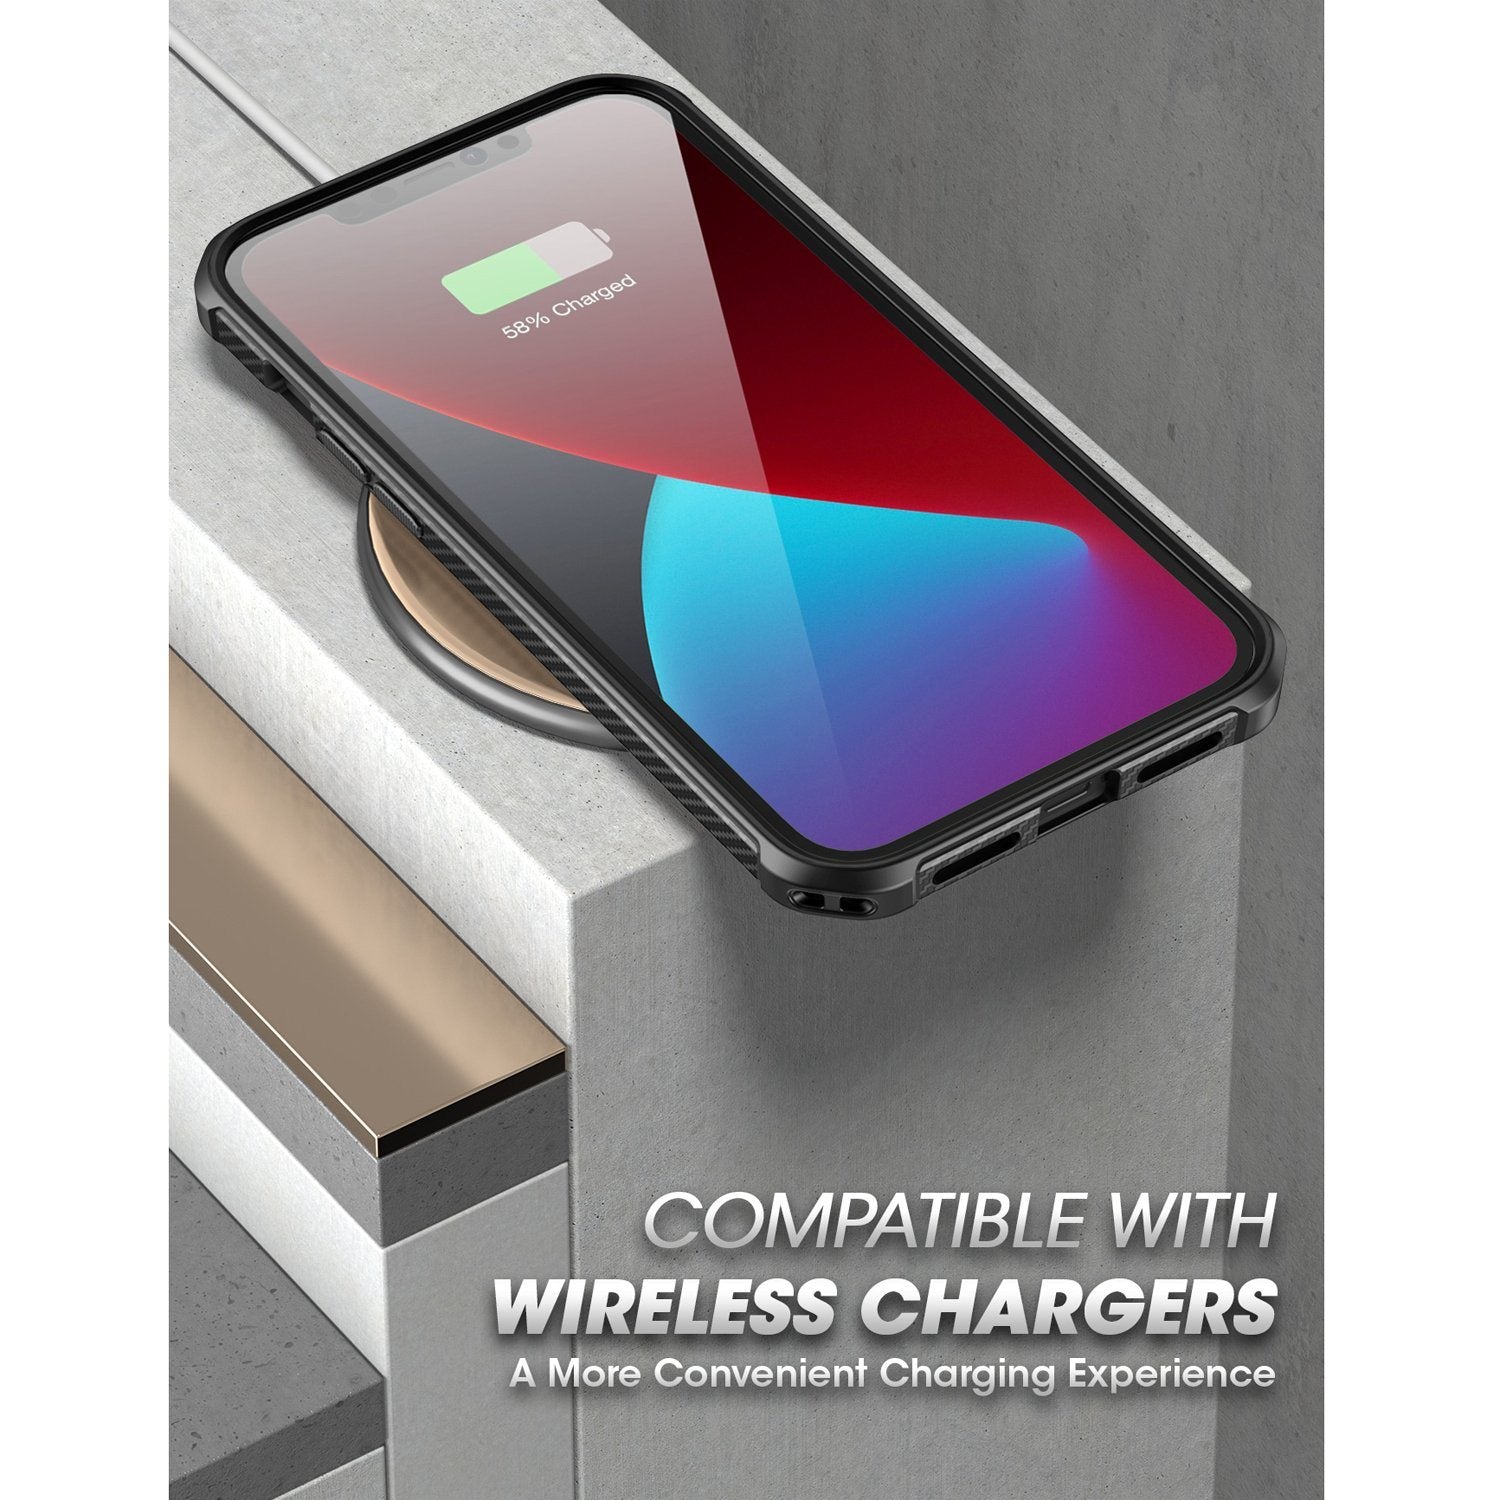 Supcase UB Exo Premium Hybrid Protective Clear Bumper Case for iPhone 12 mini 5.4"(2020), Black Default Supcase 